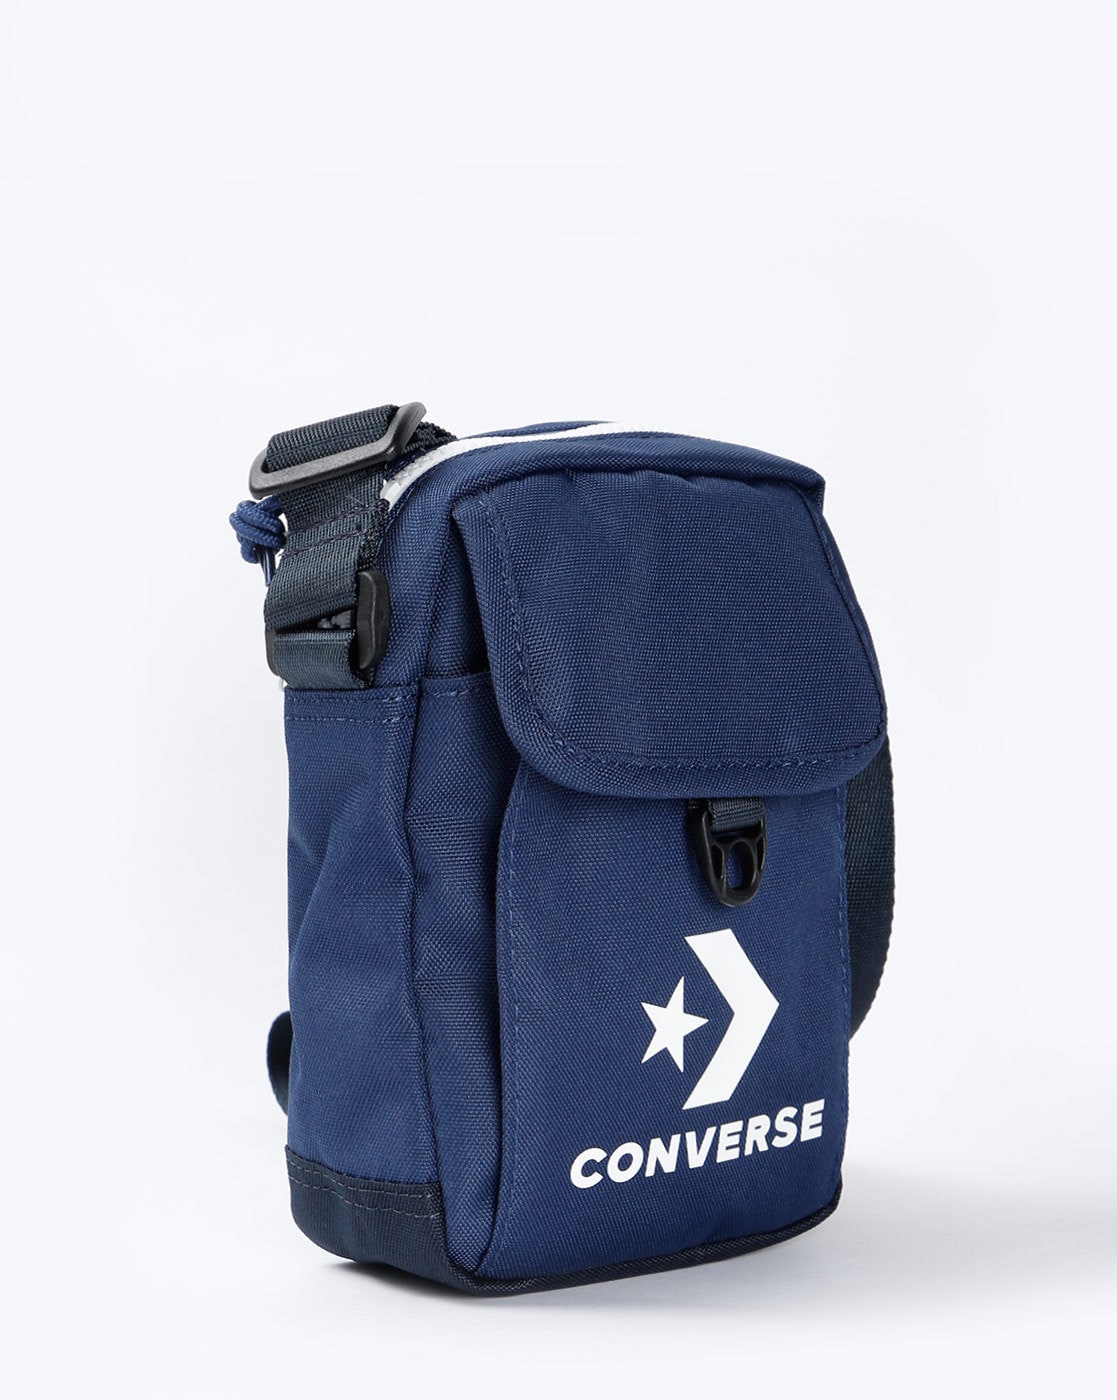 converse sling bag price